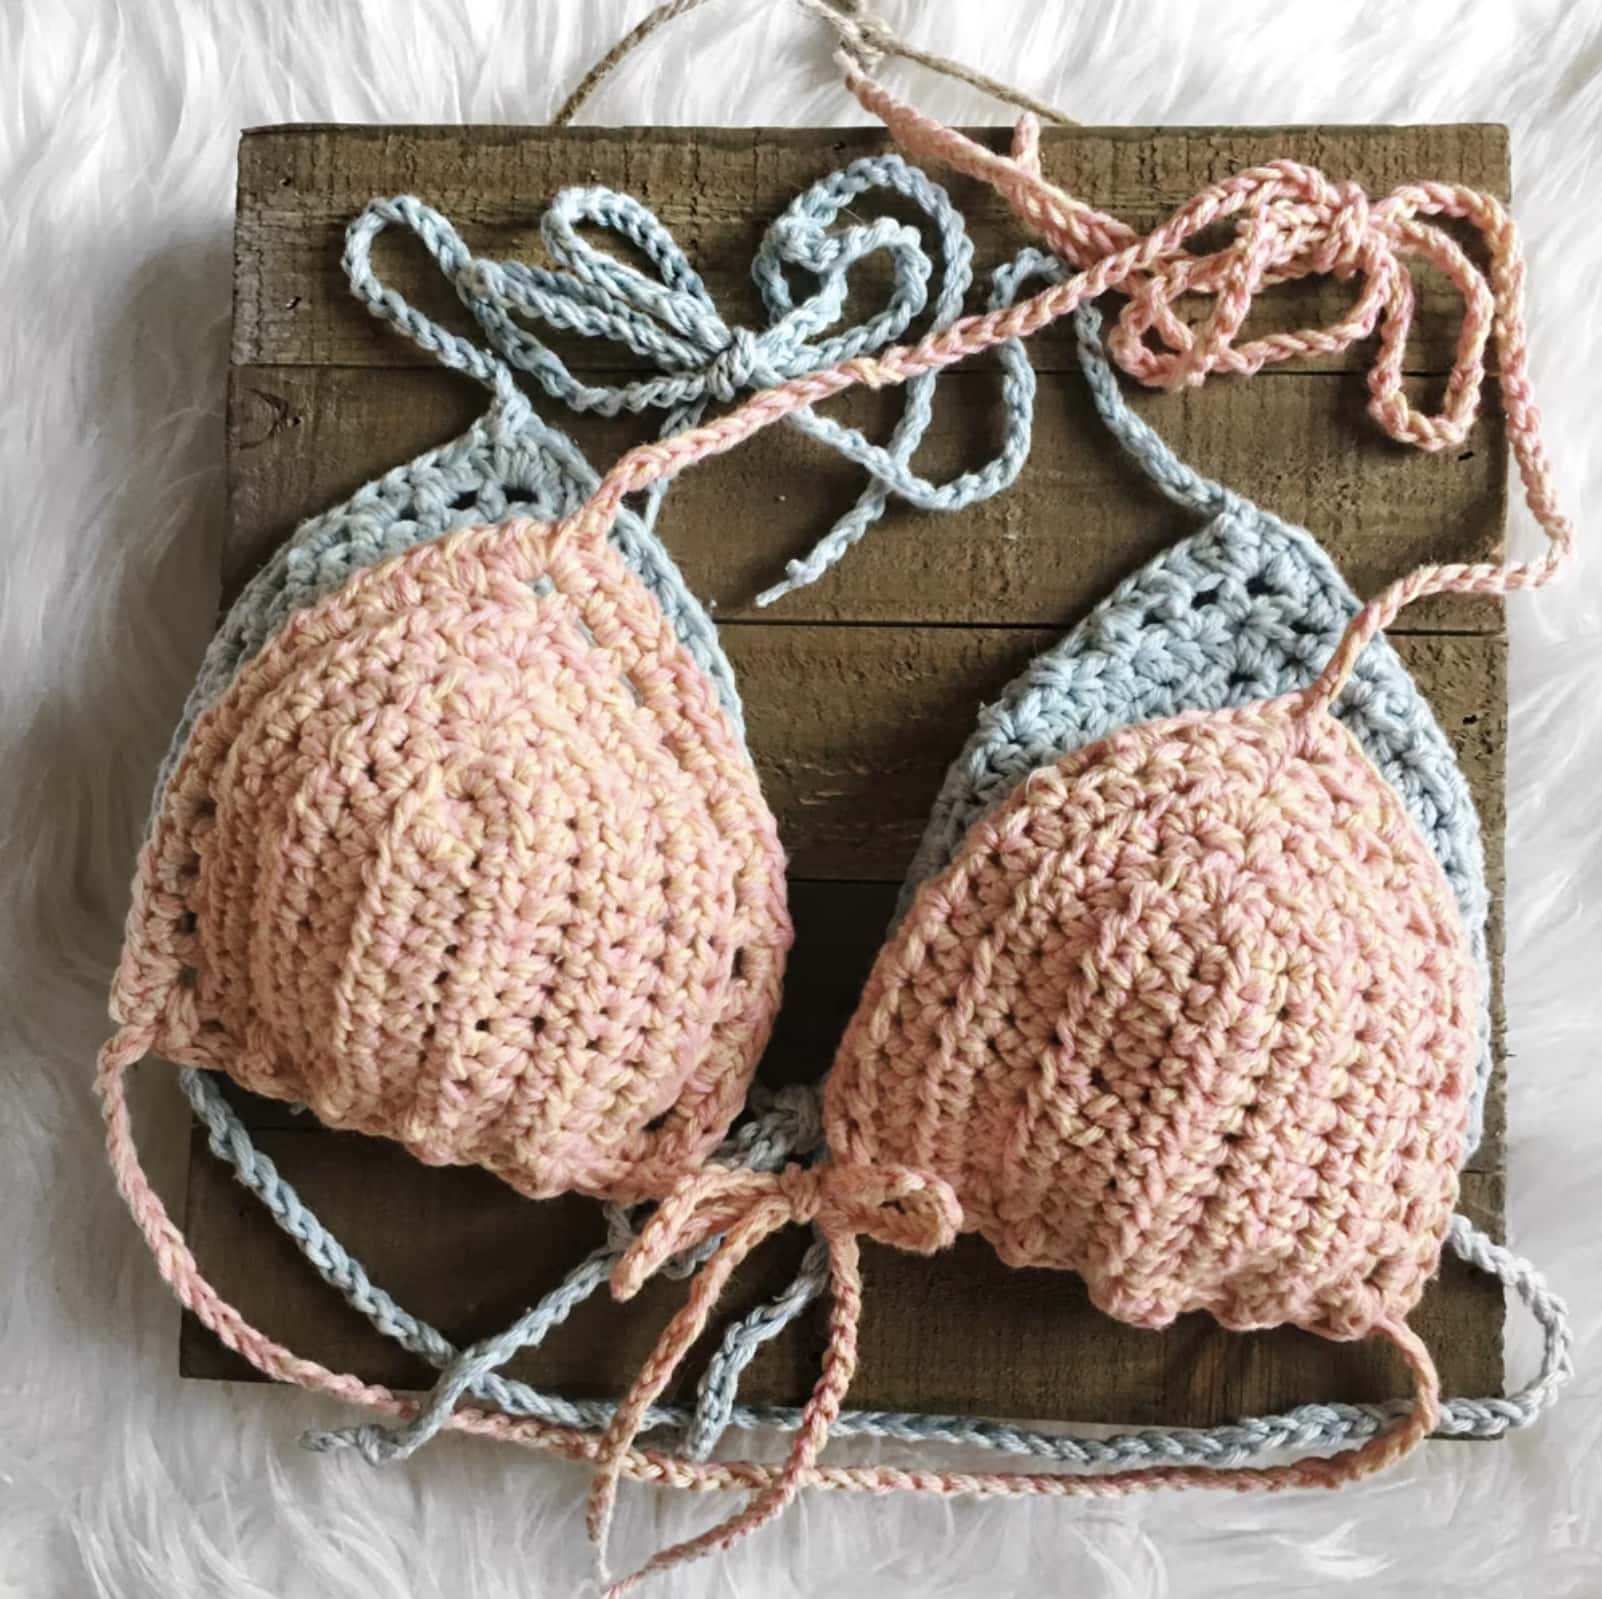 Crochet bikini-swimsuit: Summer giveaway, videotutorial and free pattern